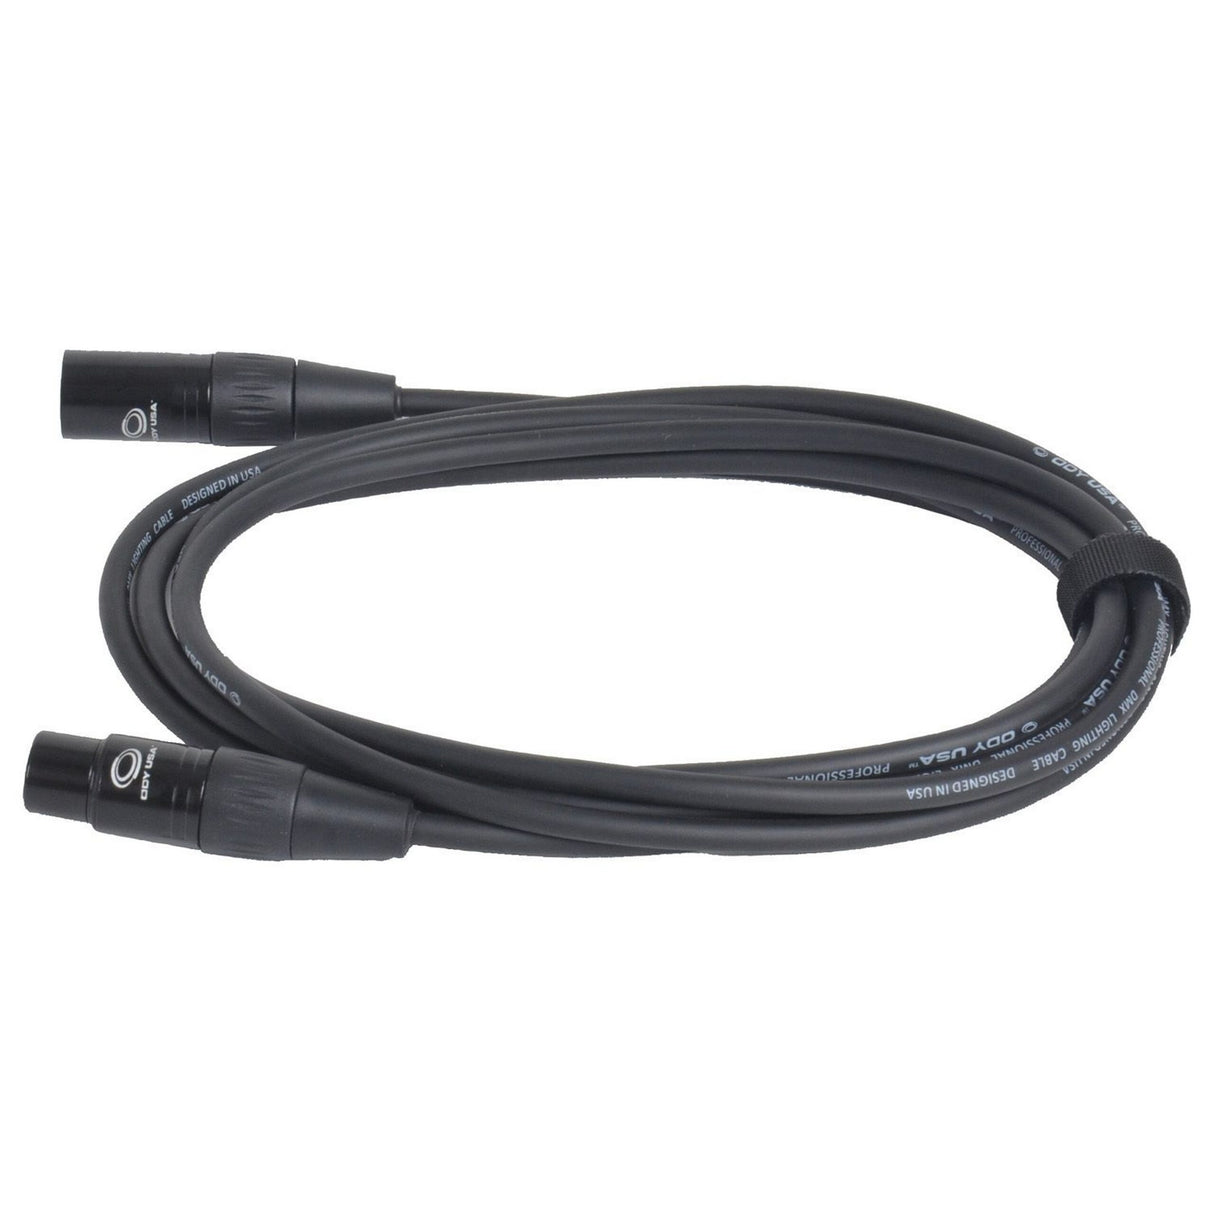 Odyssey OSP103DMX3 DMX XLR Male to XLR Female Cable, 3P Pro, 3-Feet